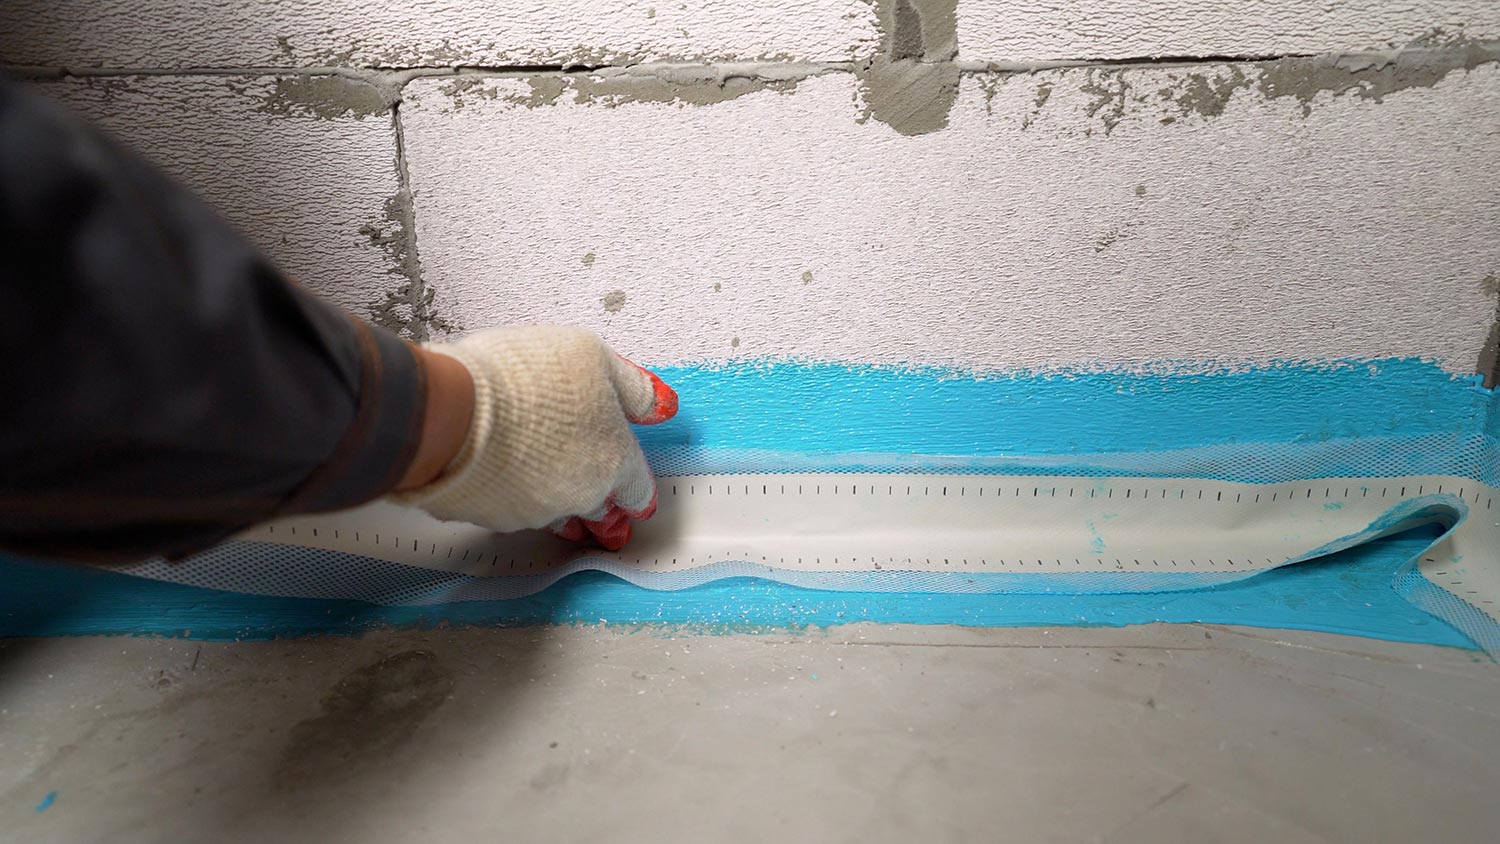 Bonding waterproofing tape to the floor